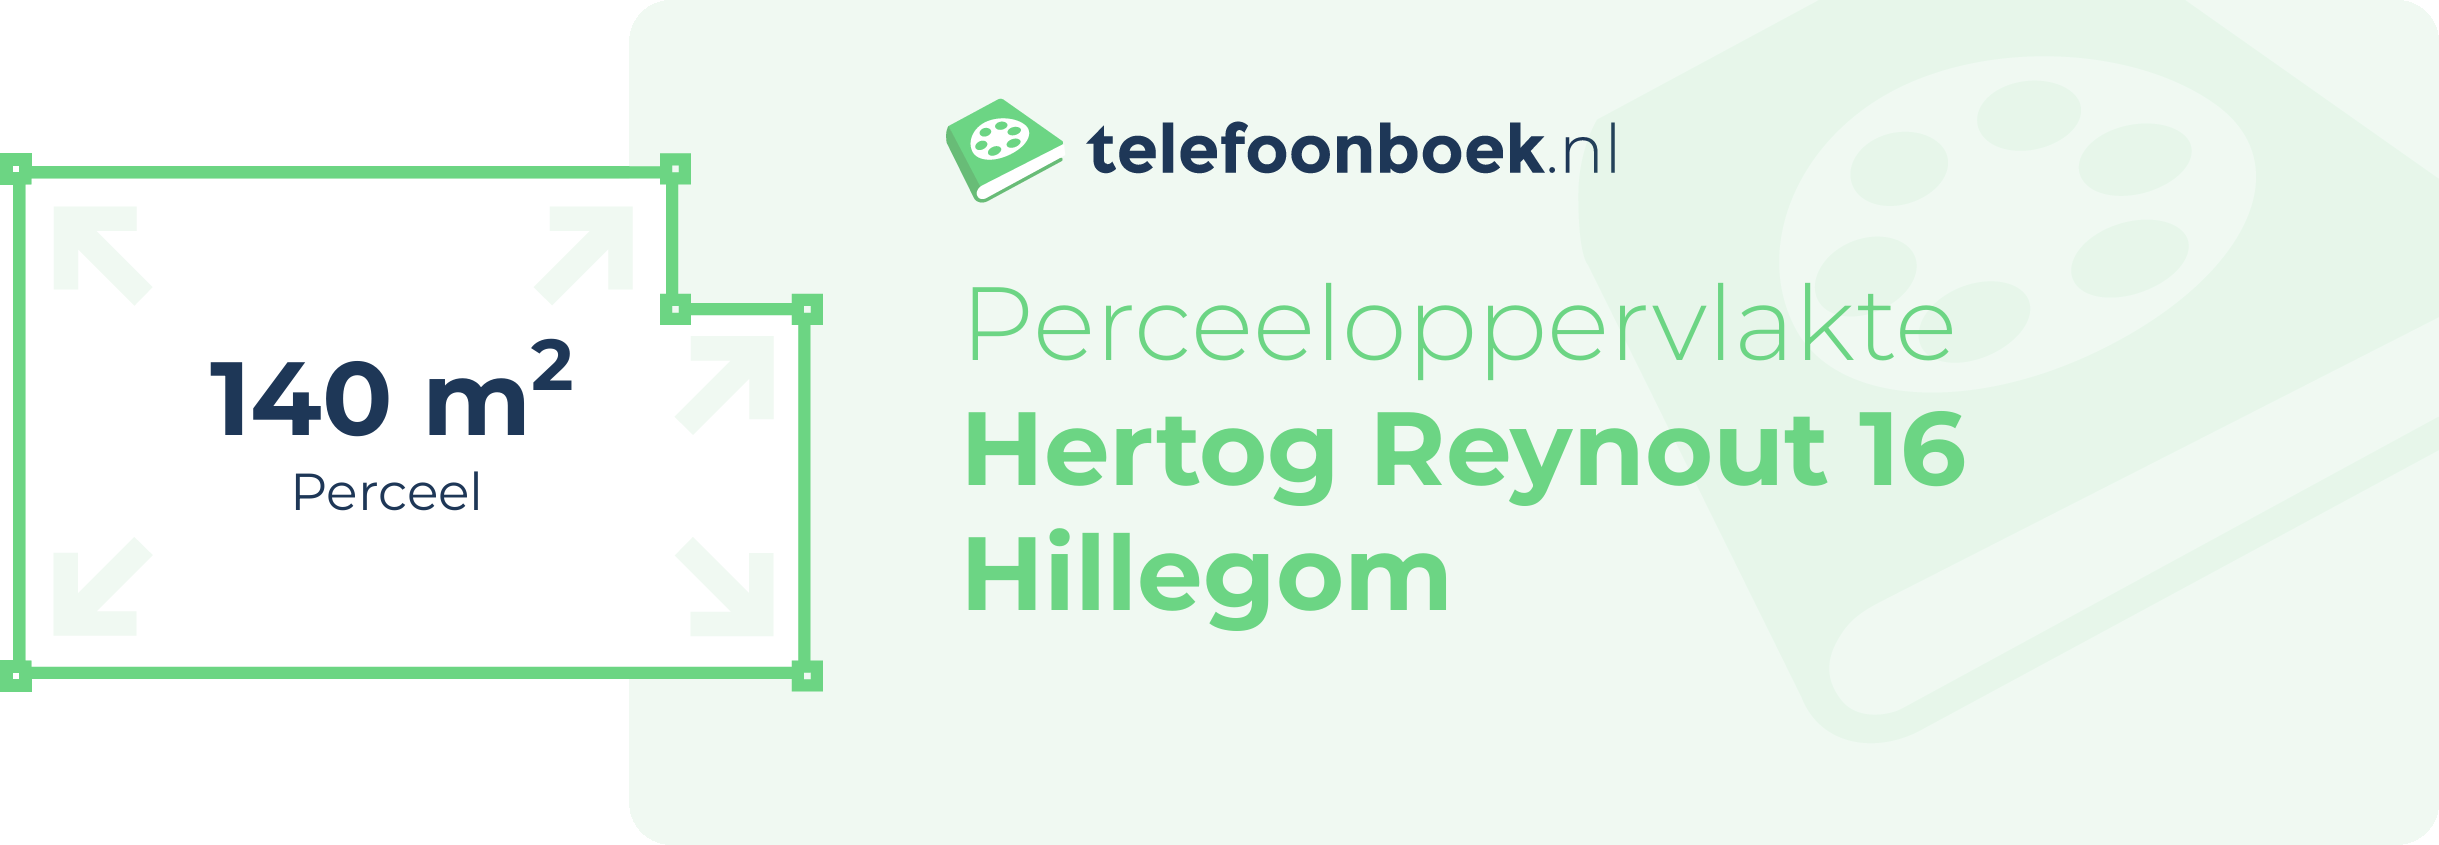 Perceeloppervlakte Hertog Reynout 16 Hillegom